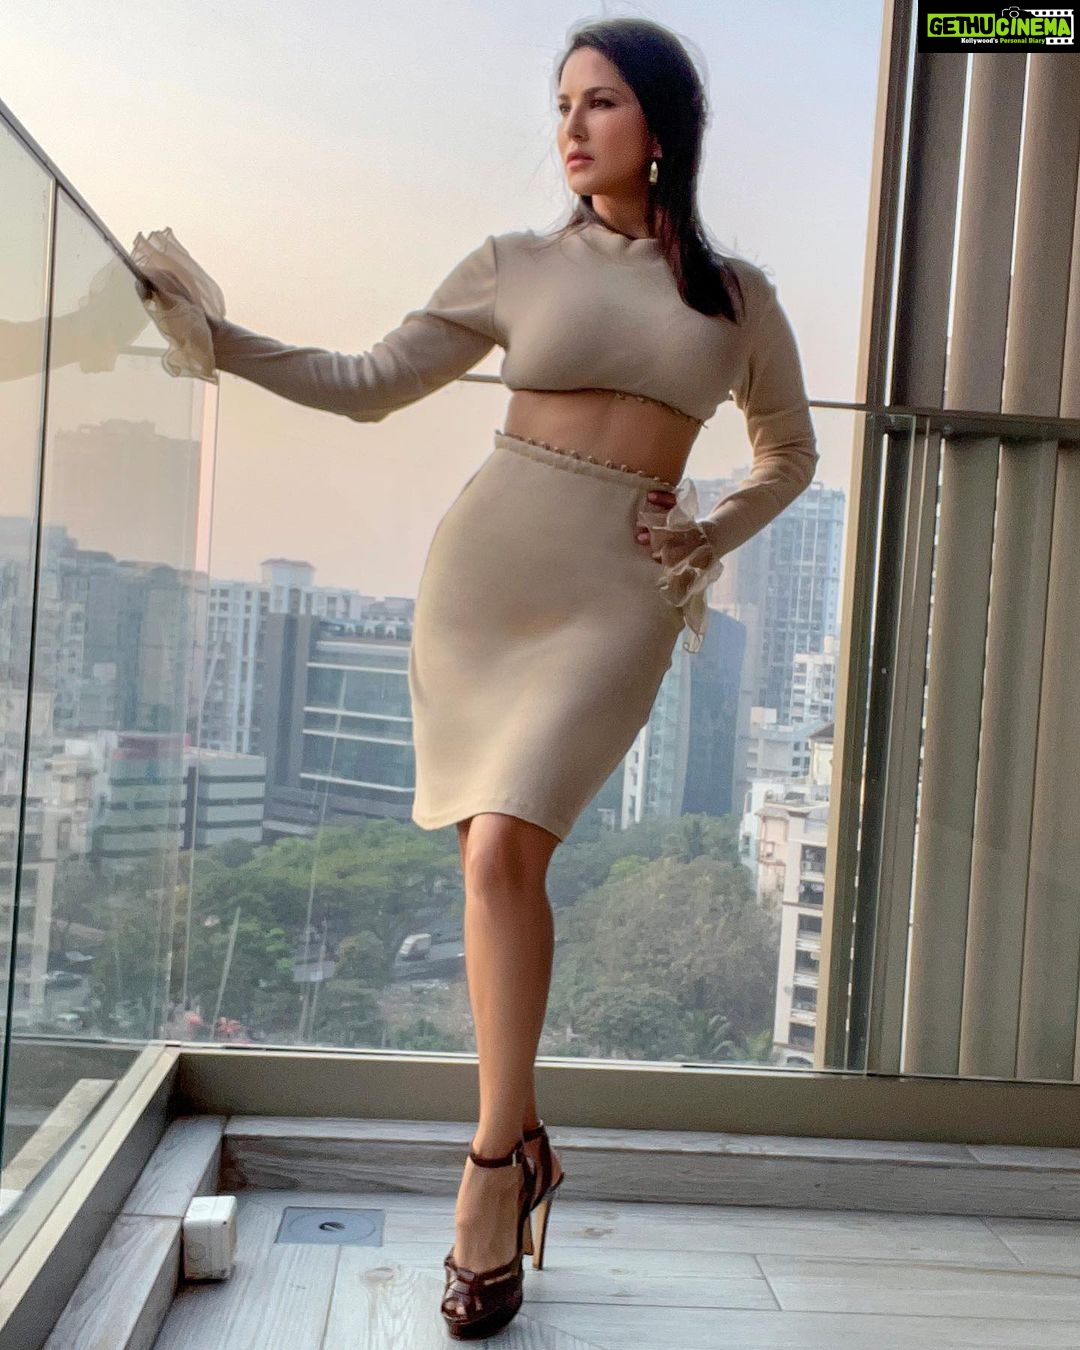 Sunny Leone - 1.4 Million Likes - Most Liked Instagram Photos